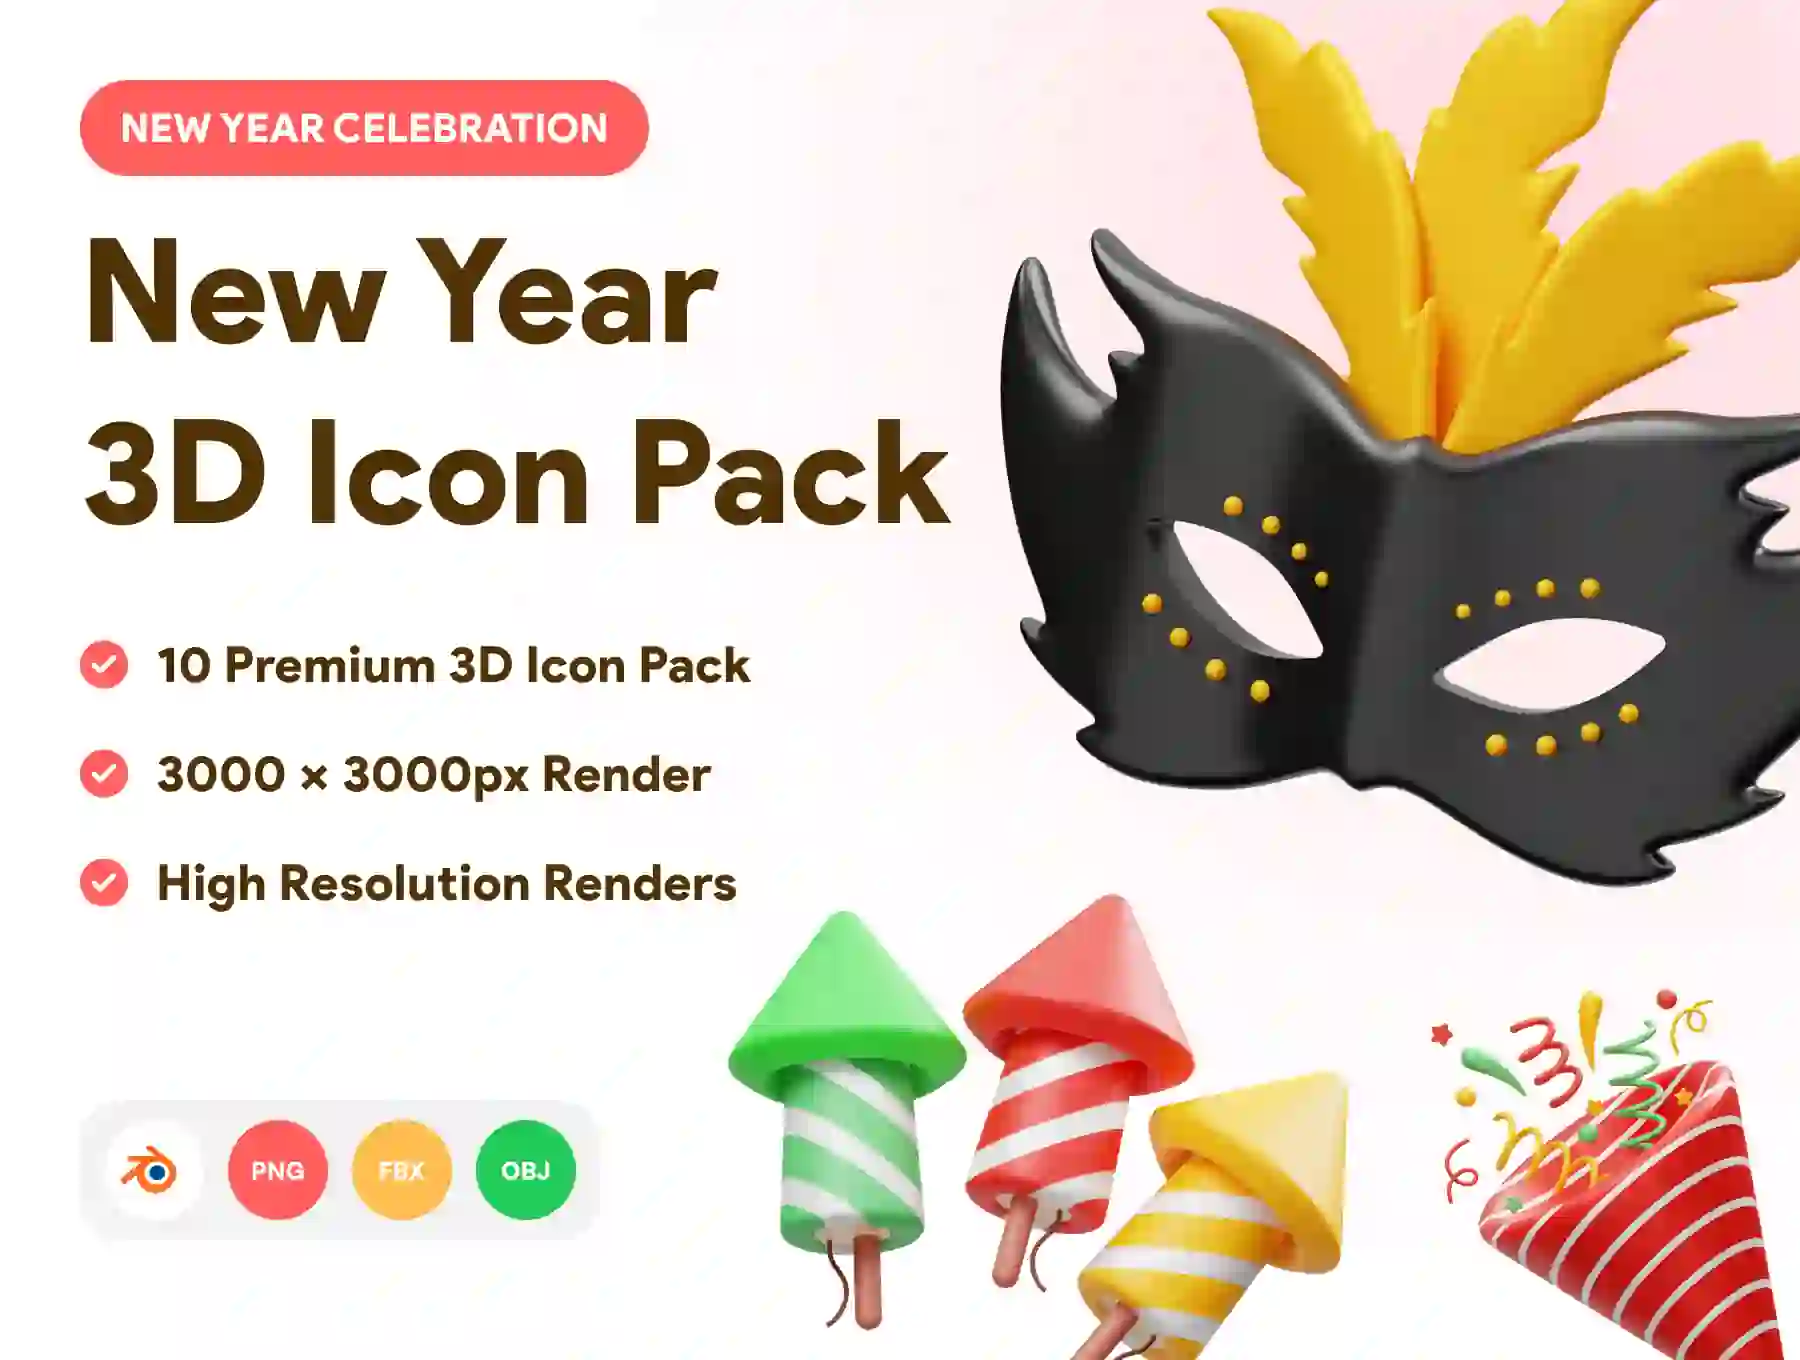 New Year Celebration 3D Icon